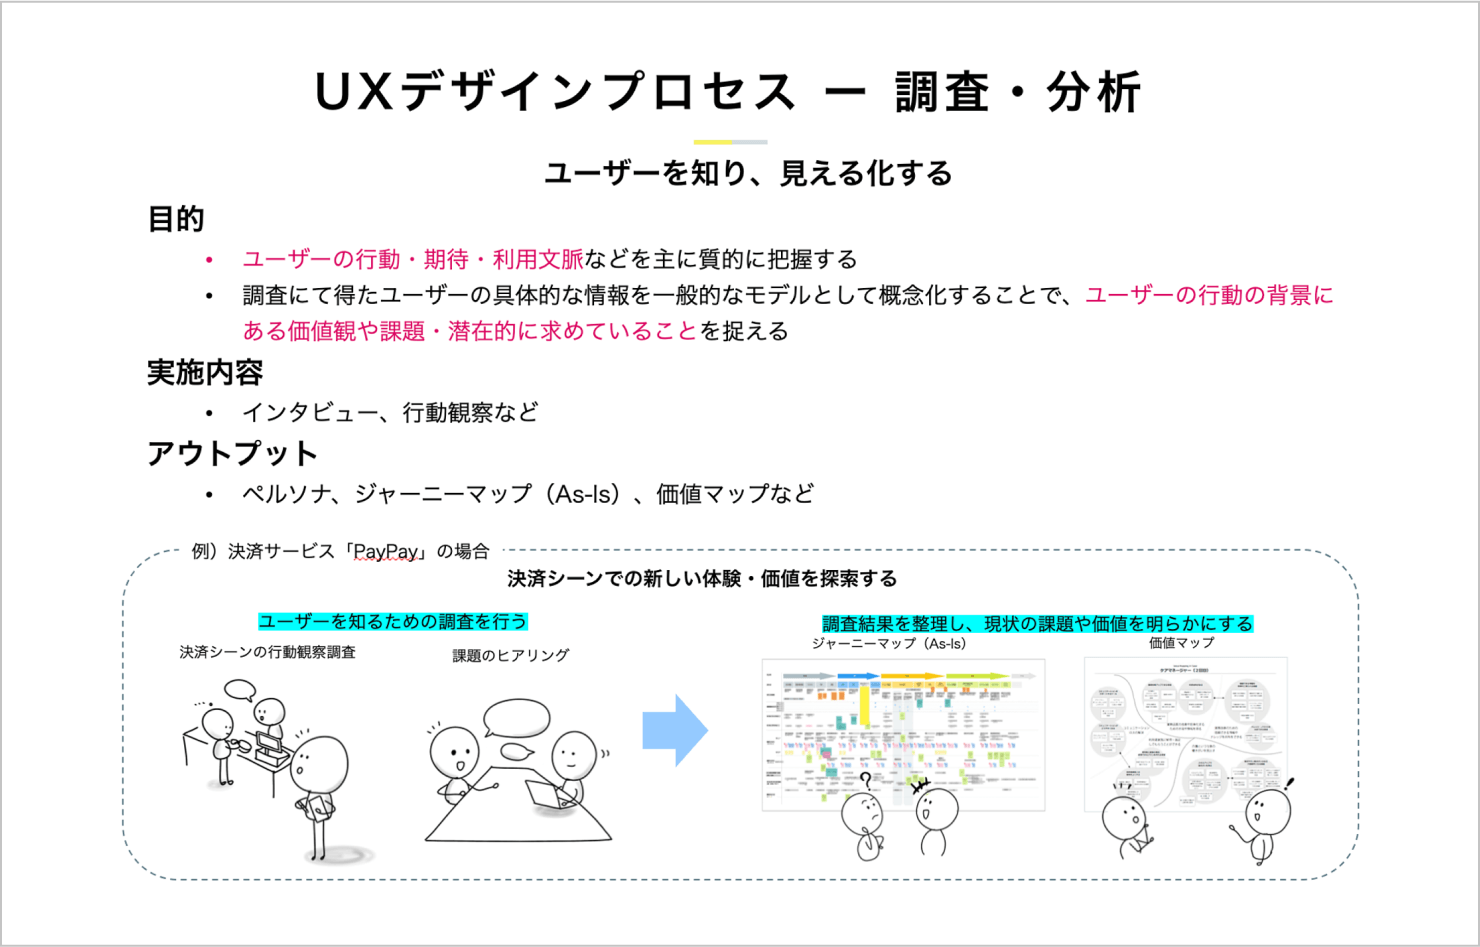 UXデザインのプロセス（ユーザー調査・分析の方法）を解説した資料。